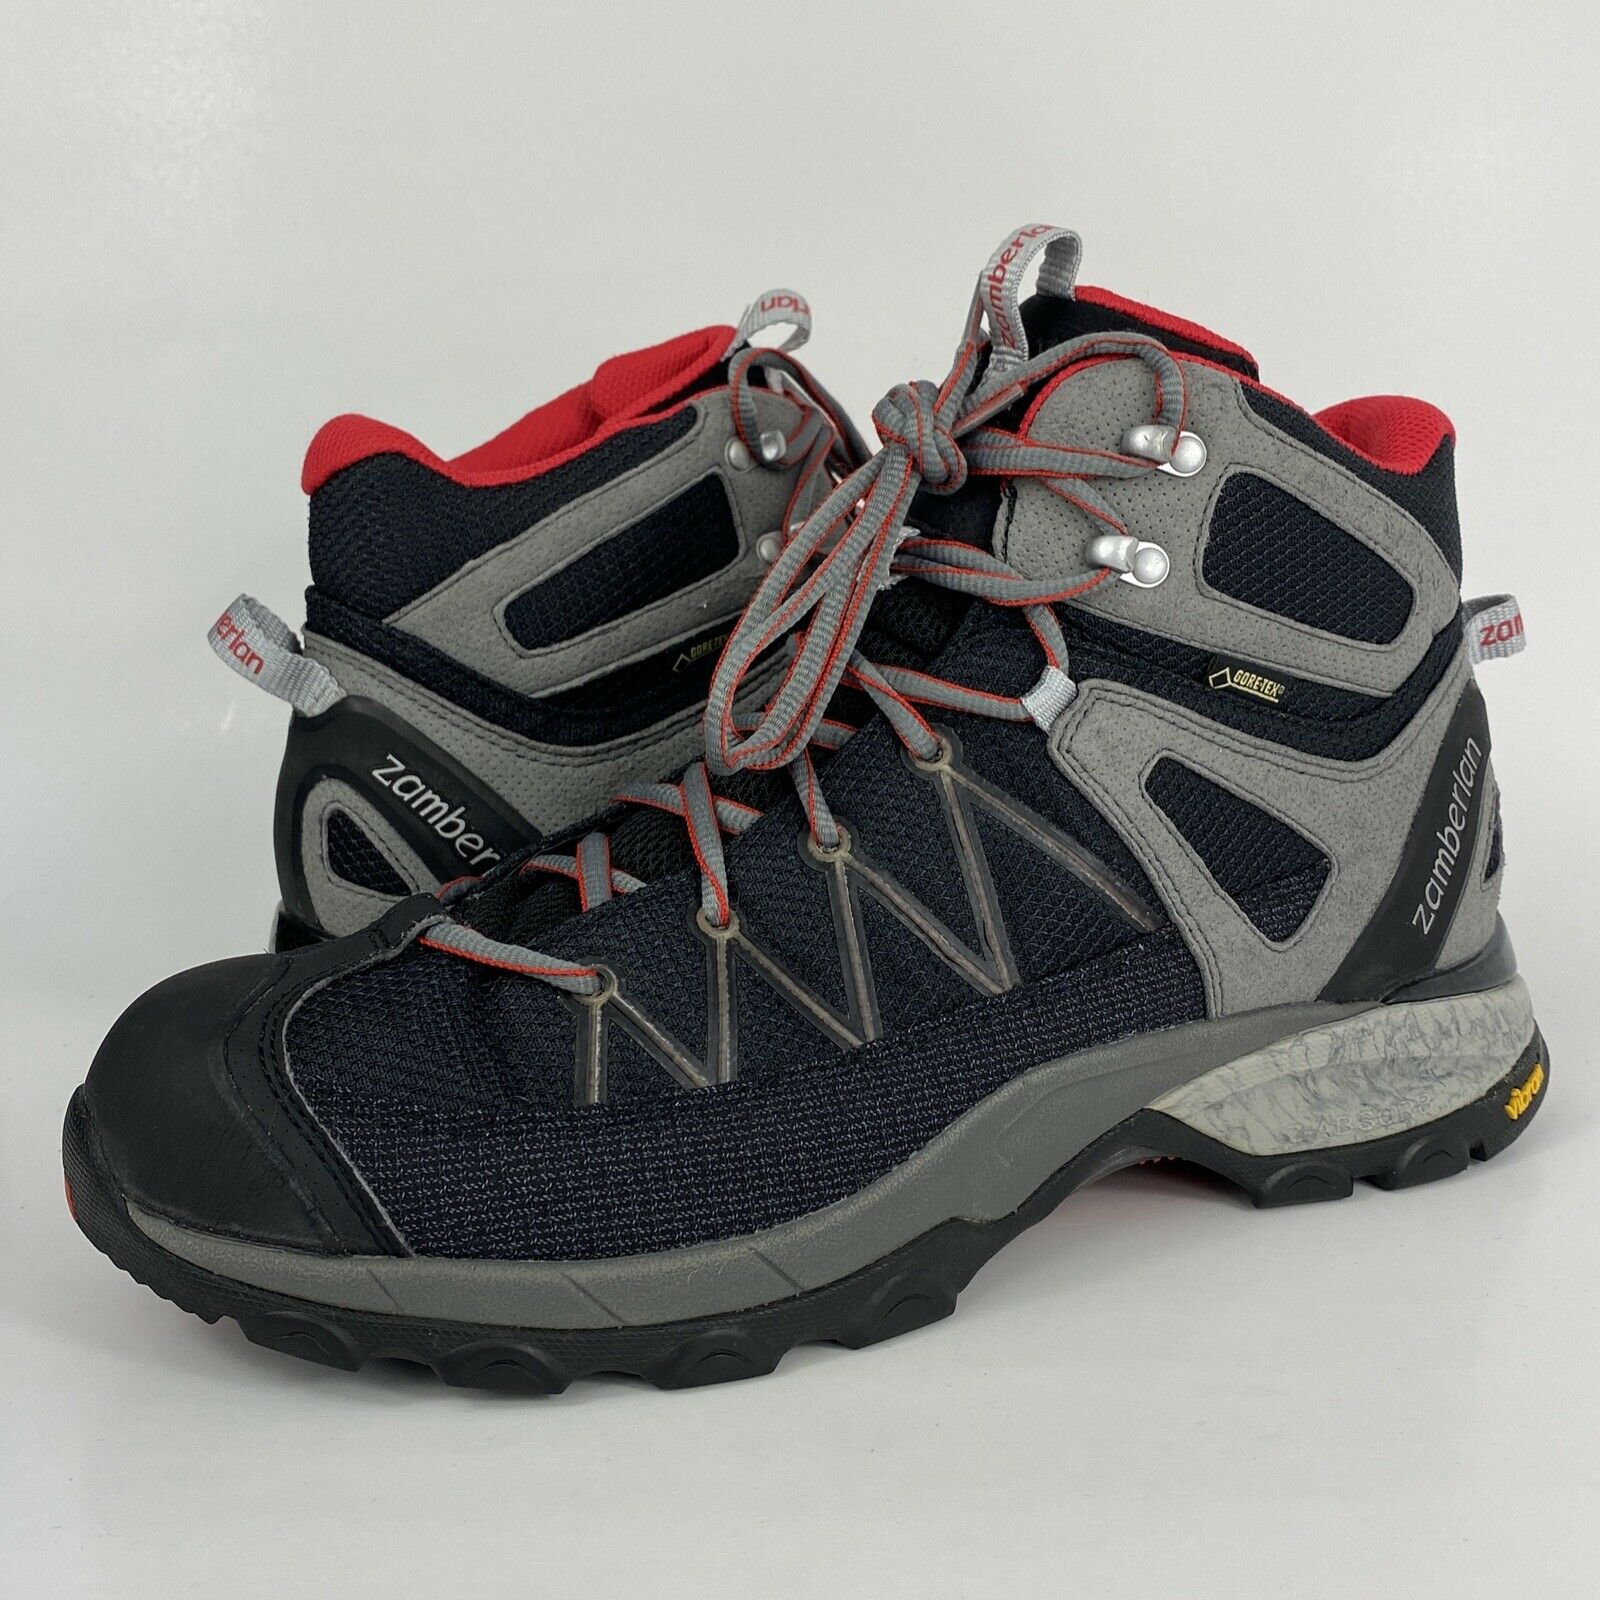 Zamberlan 230 SH Crosser Plus GoreTex RR Hiking Boots Black/Red Men's Size 12